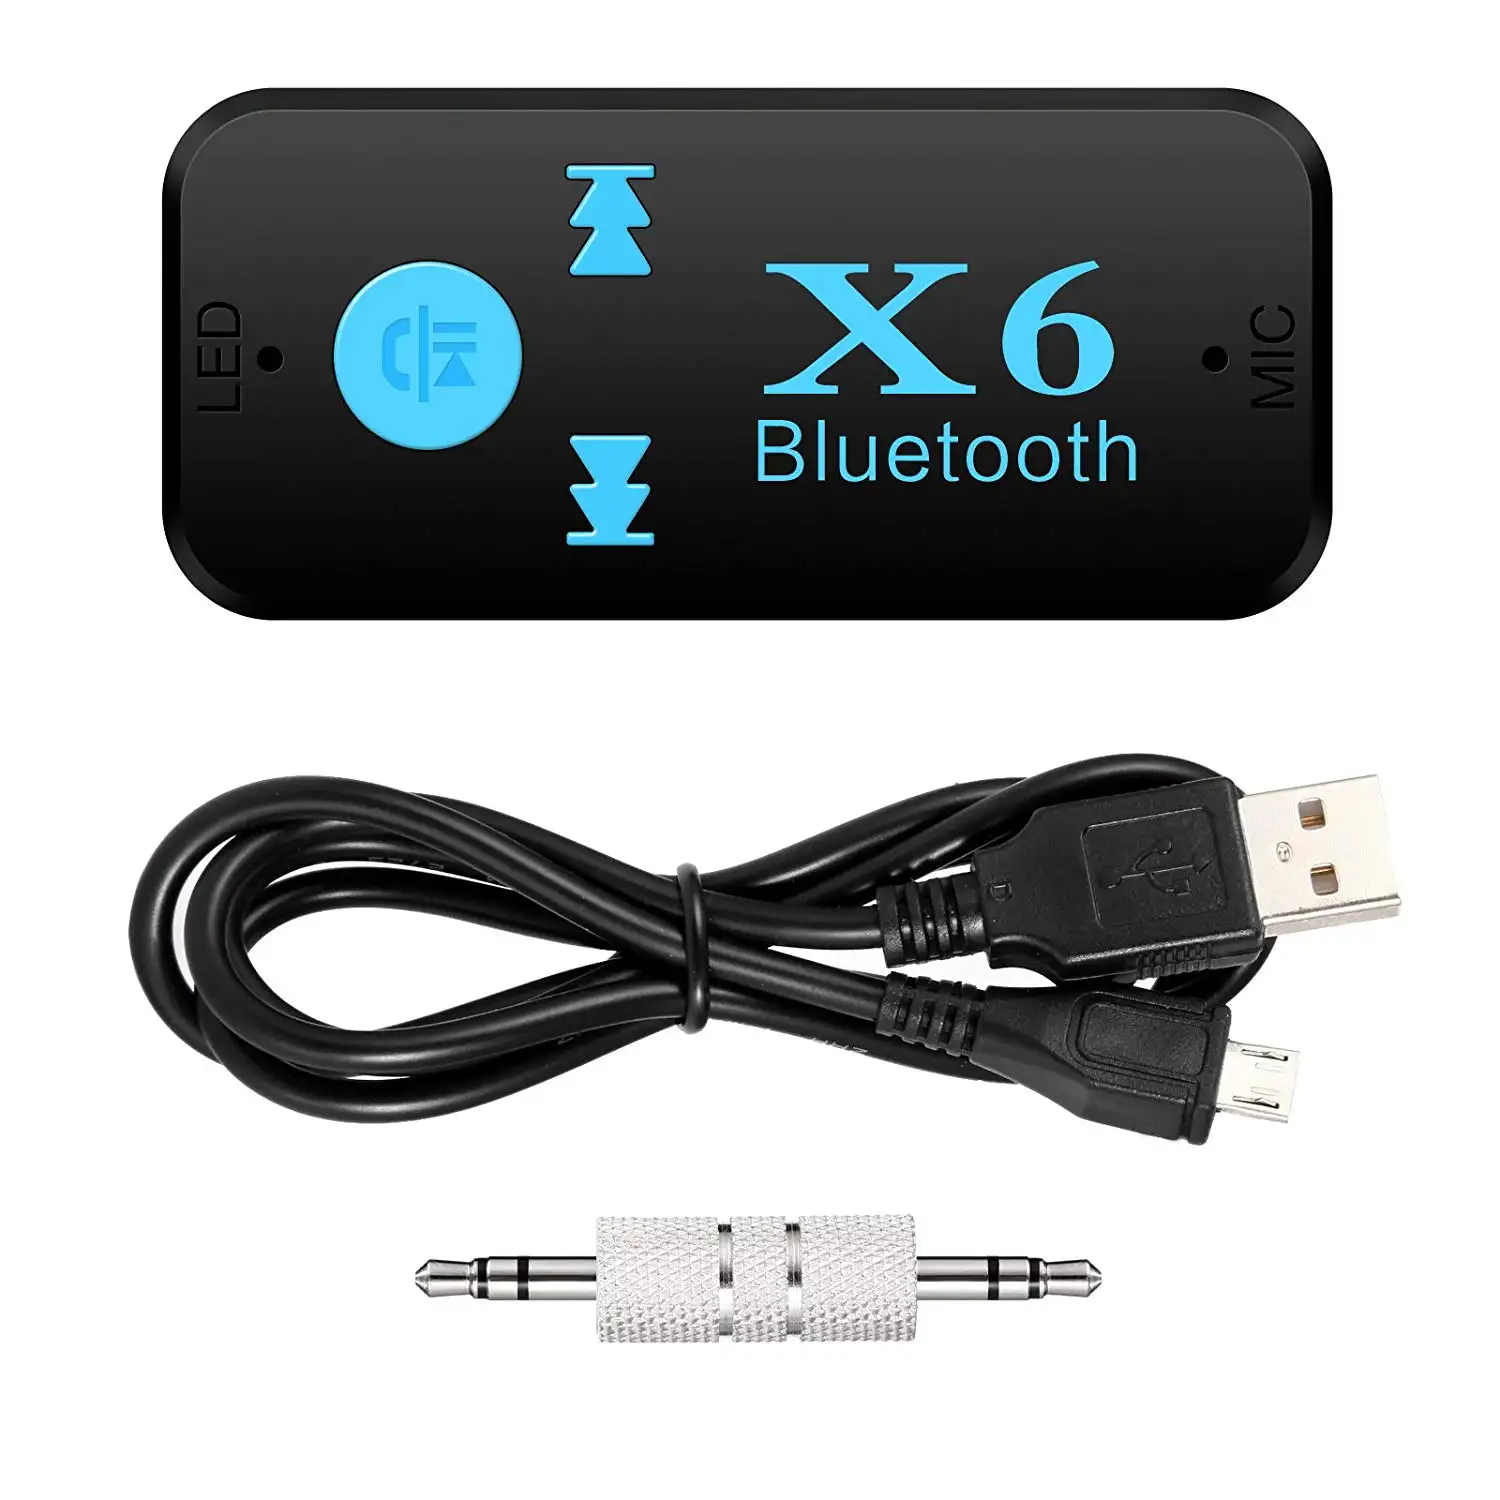 Higi X6 Bluetooth Ontvanger Met Tf Card, Draagbare Draadloze 3.5 Mm Jack Bluetooth Music Receiver Audio Adapter Voor Auto